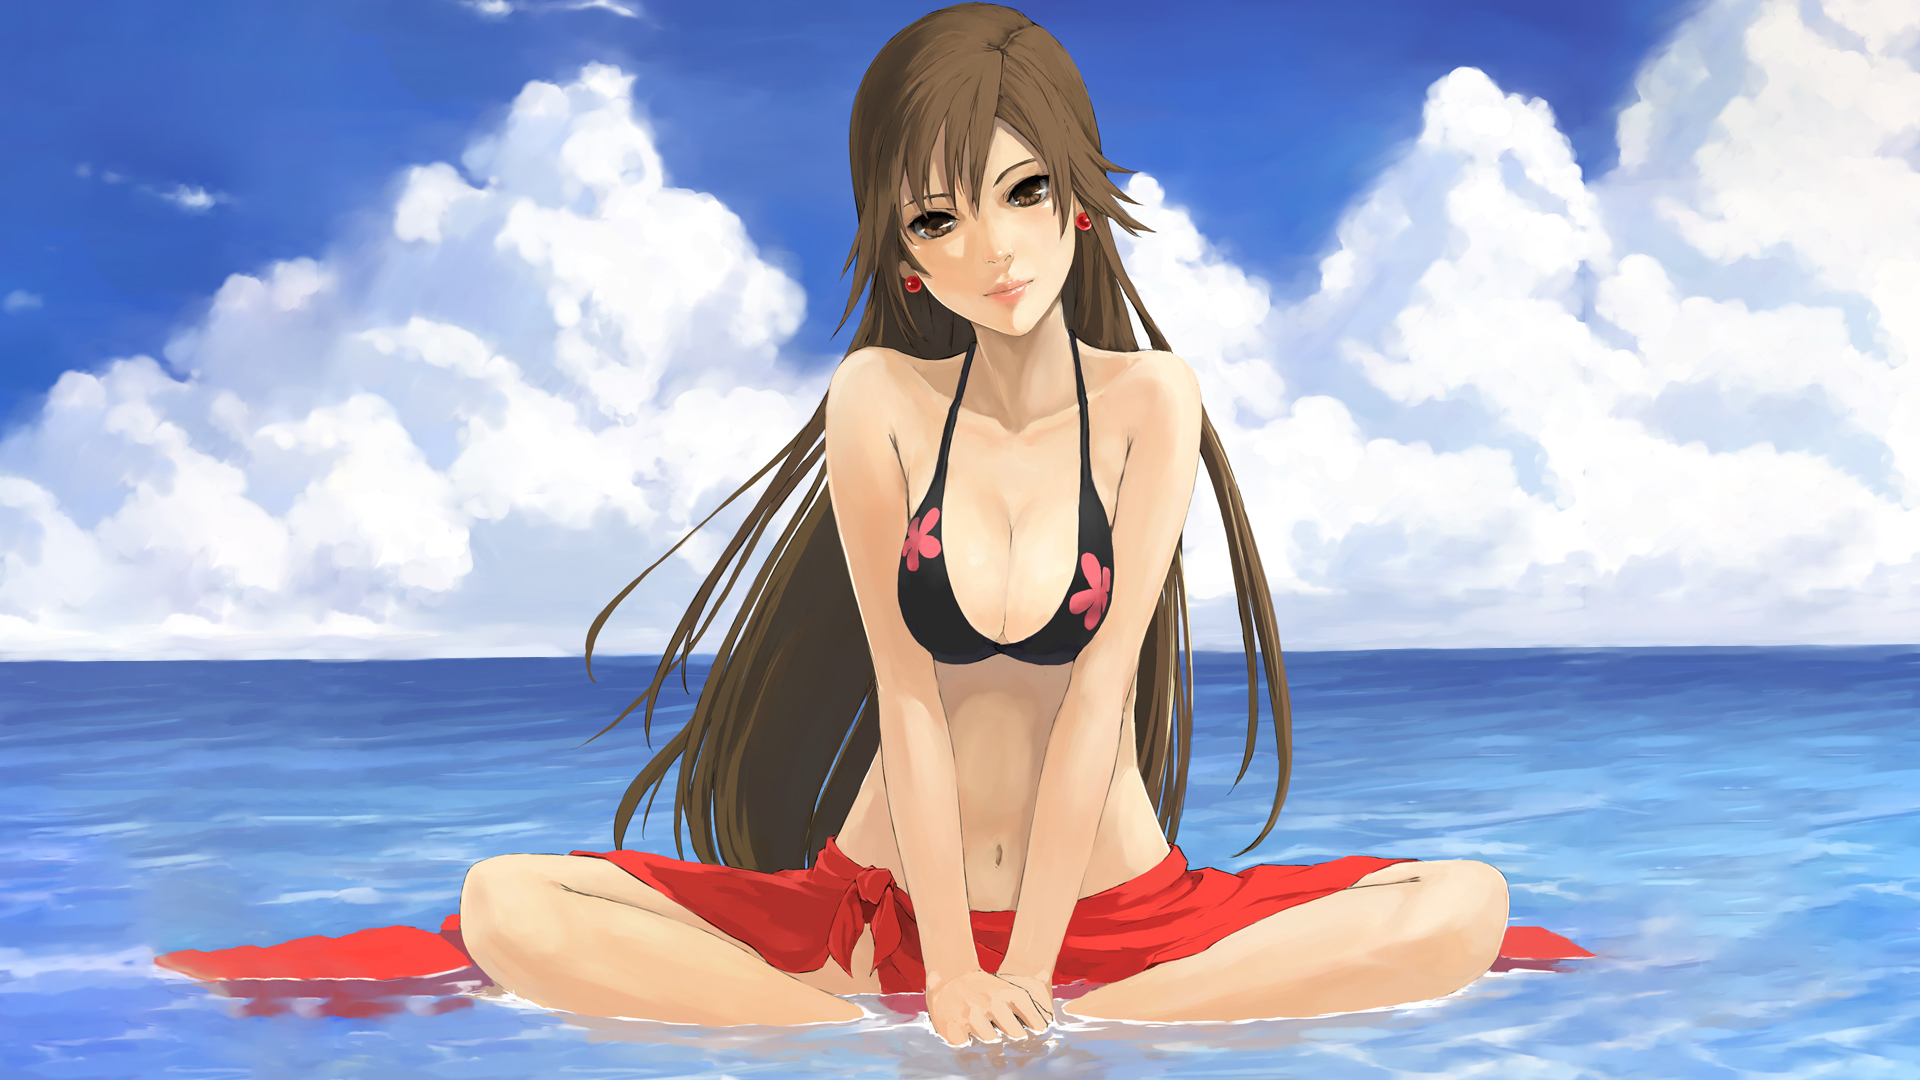 Anime 1920x1080 Aria Akira E. Ferrari anime girls anime brunette boobs long hair water clouds frontal view bikini